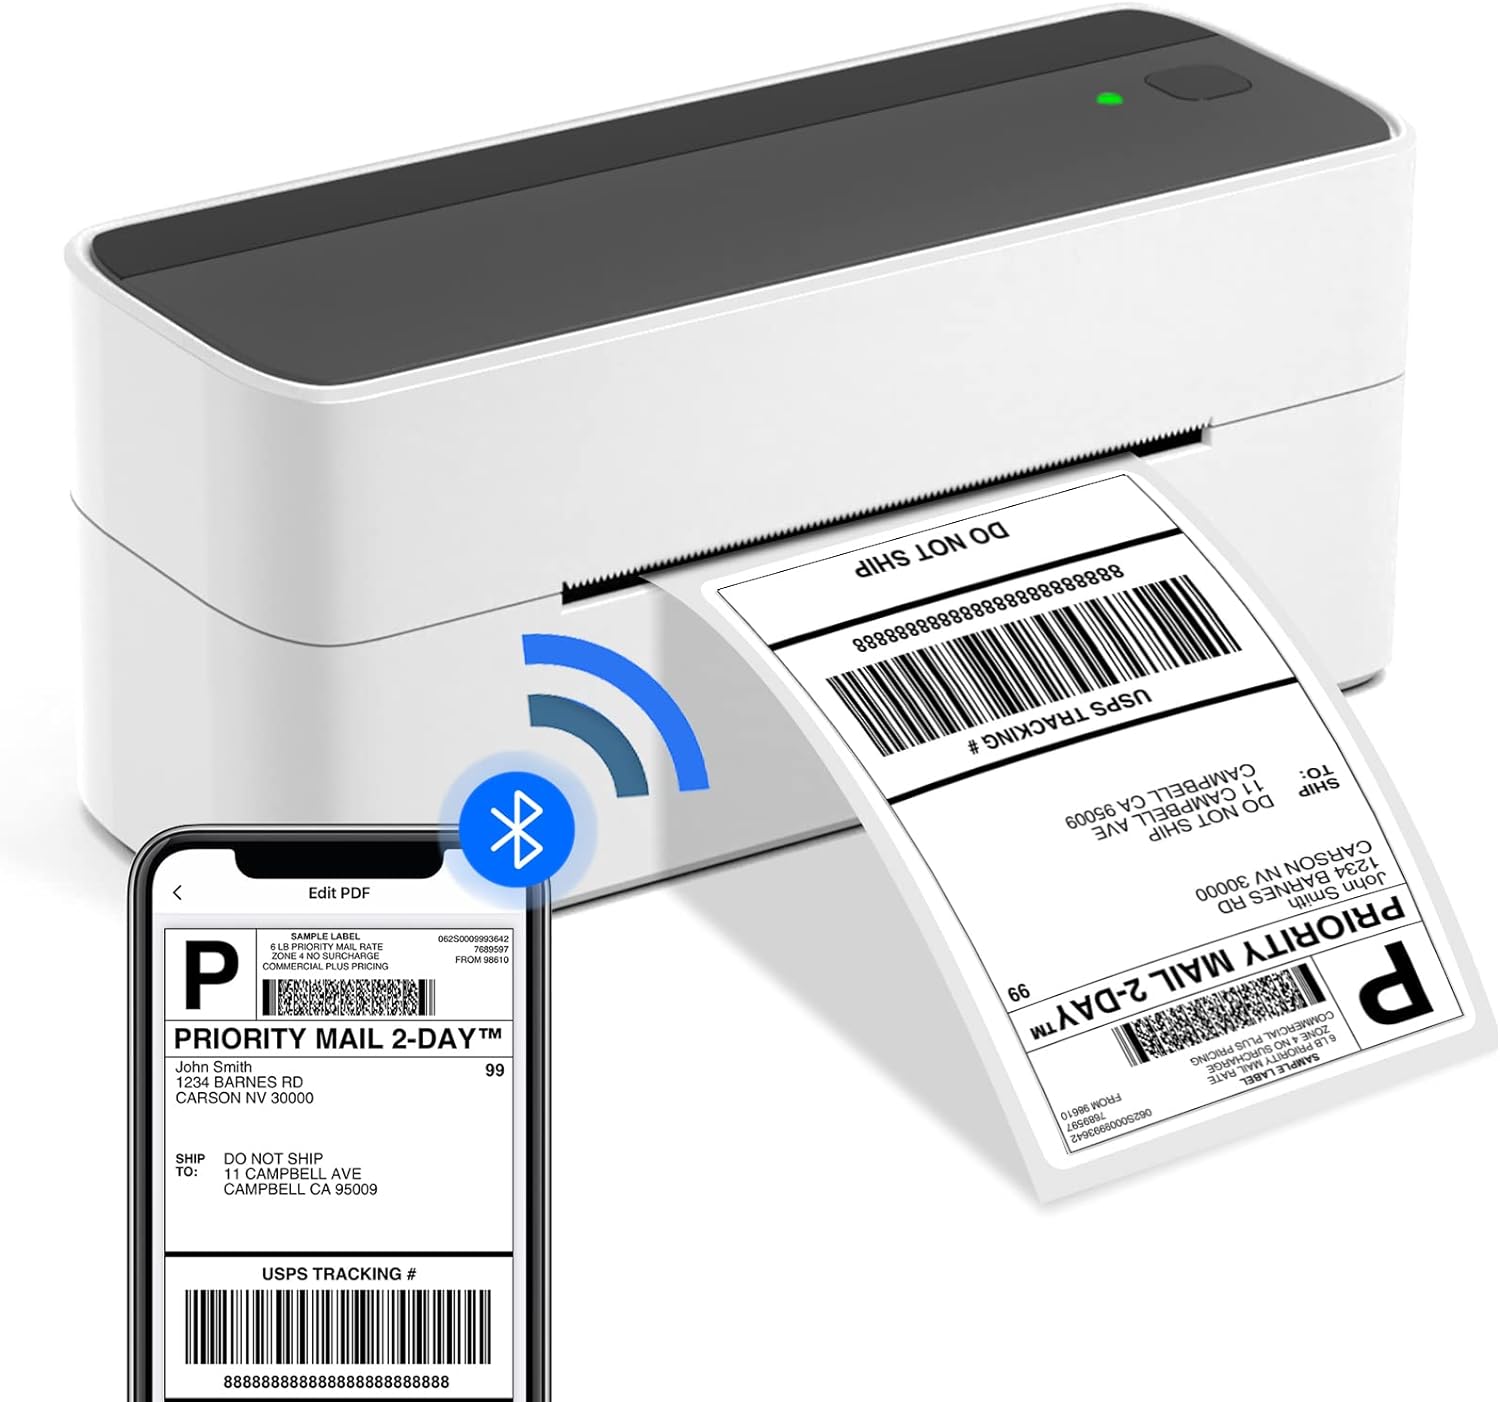 Phomemo 241-BT Bluetooth Thermal Label Printer - $85